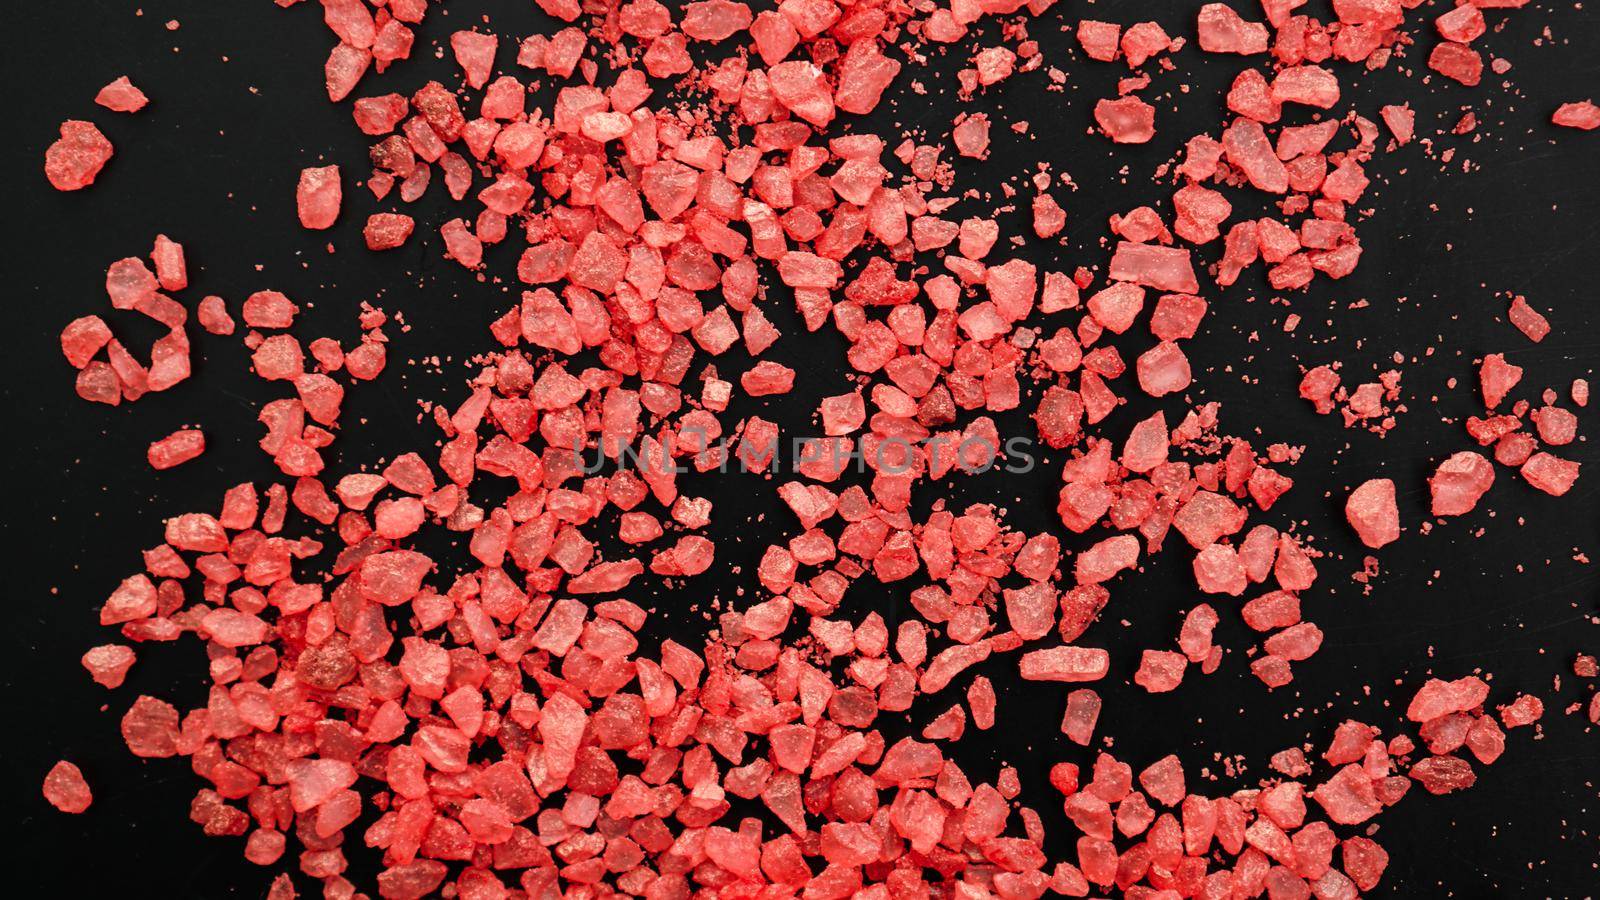 Salt isolated on a black background. A pile of red salt. Large crystalline salt. Beauty and health concept